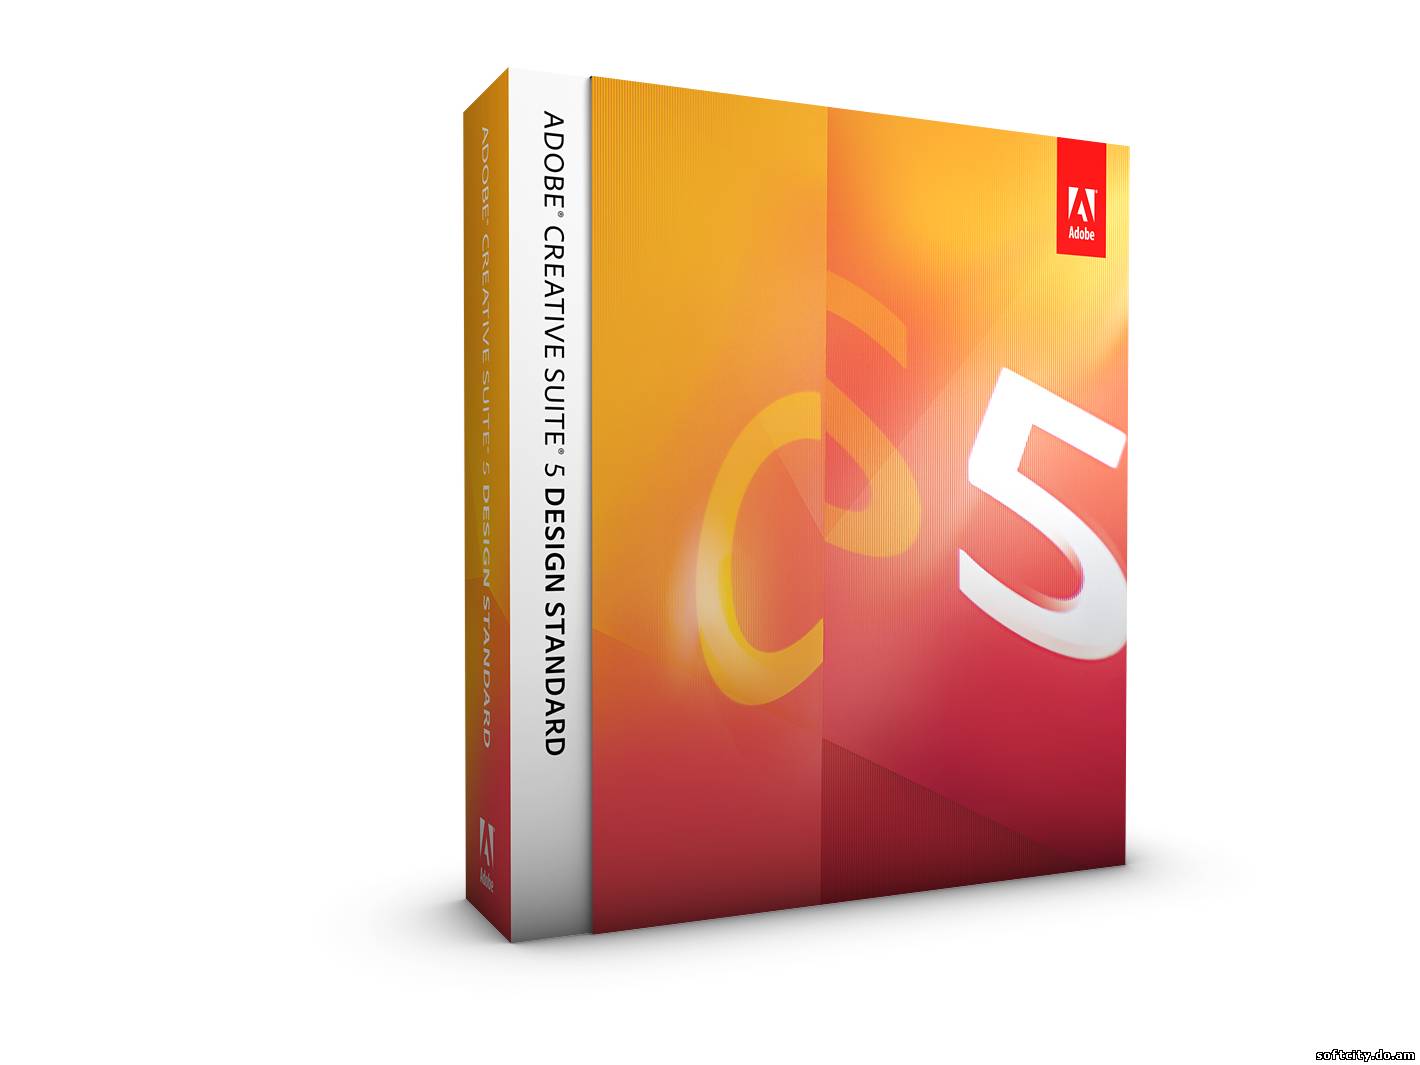 Adobe Creative Suite 5.5 Design Standard (2011/RUS/ENG)